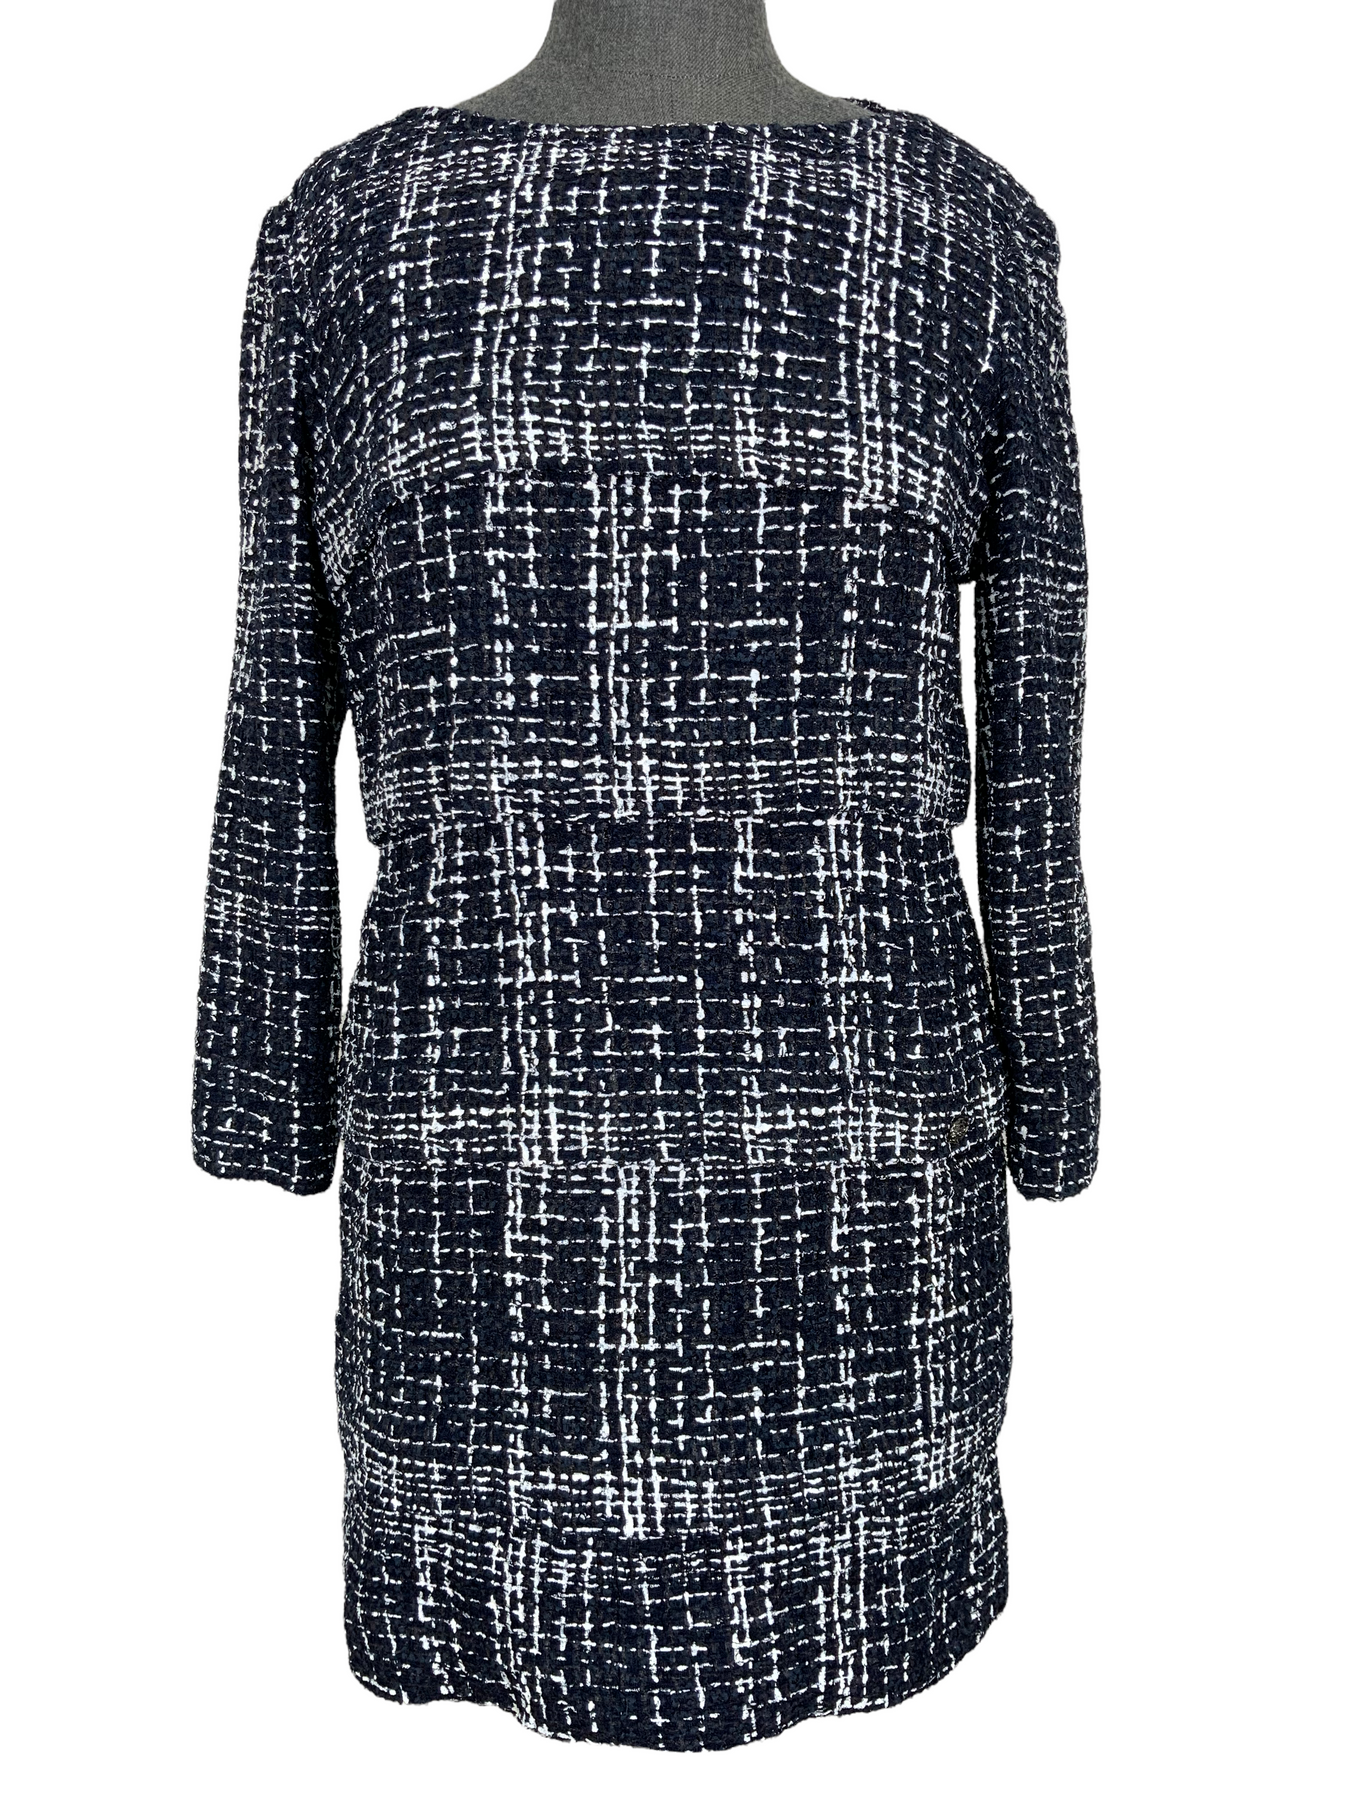 Chanel Tiered Tweed Mini Dress Size M